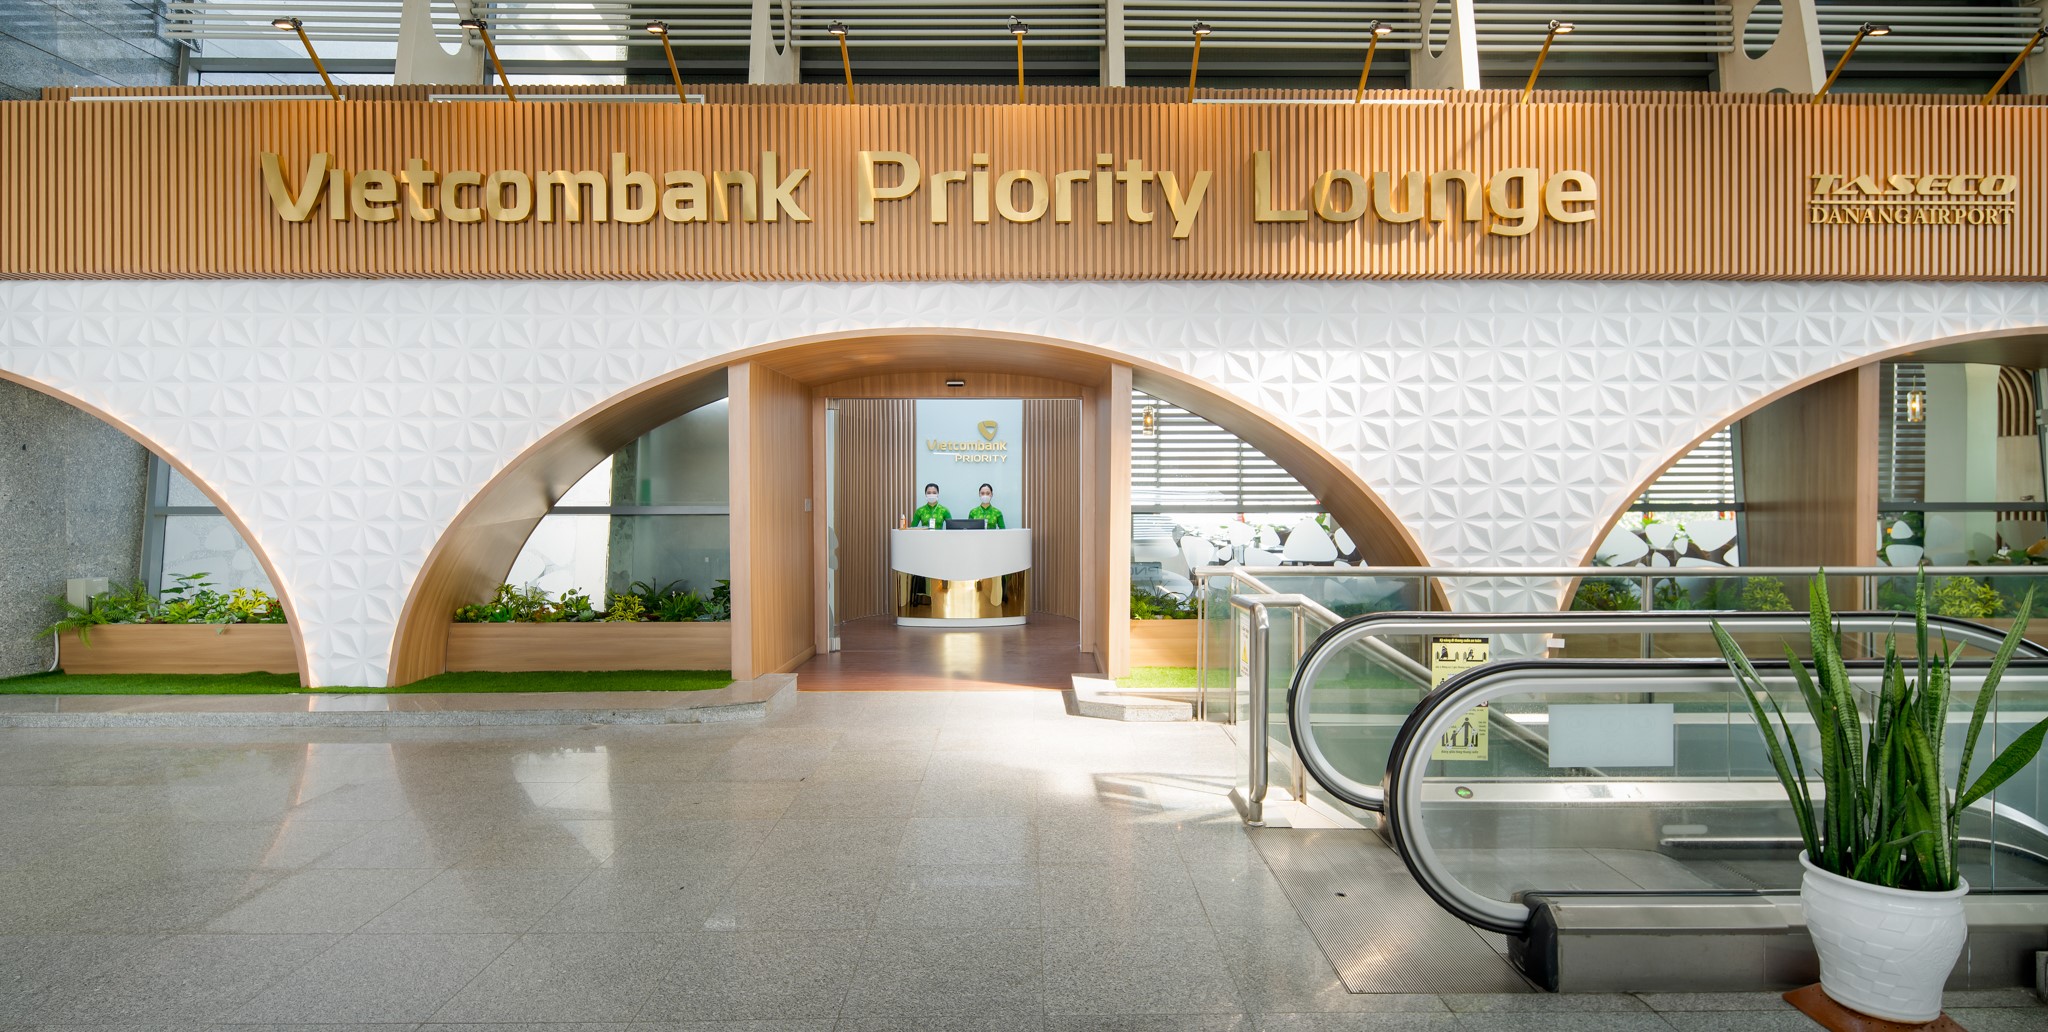  VIETCOMBANK PRIORITY LOUNGE IN DA NANG INTERNATIONAL AIRPORT